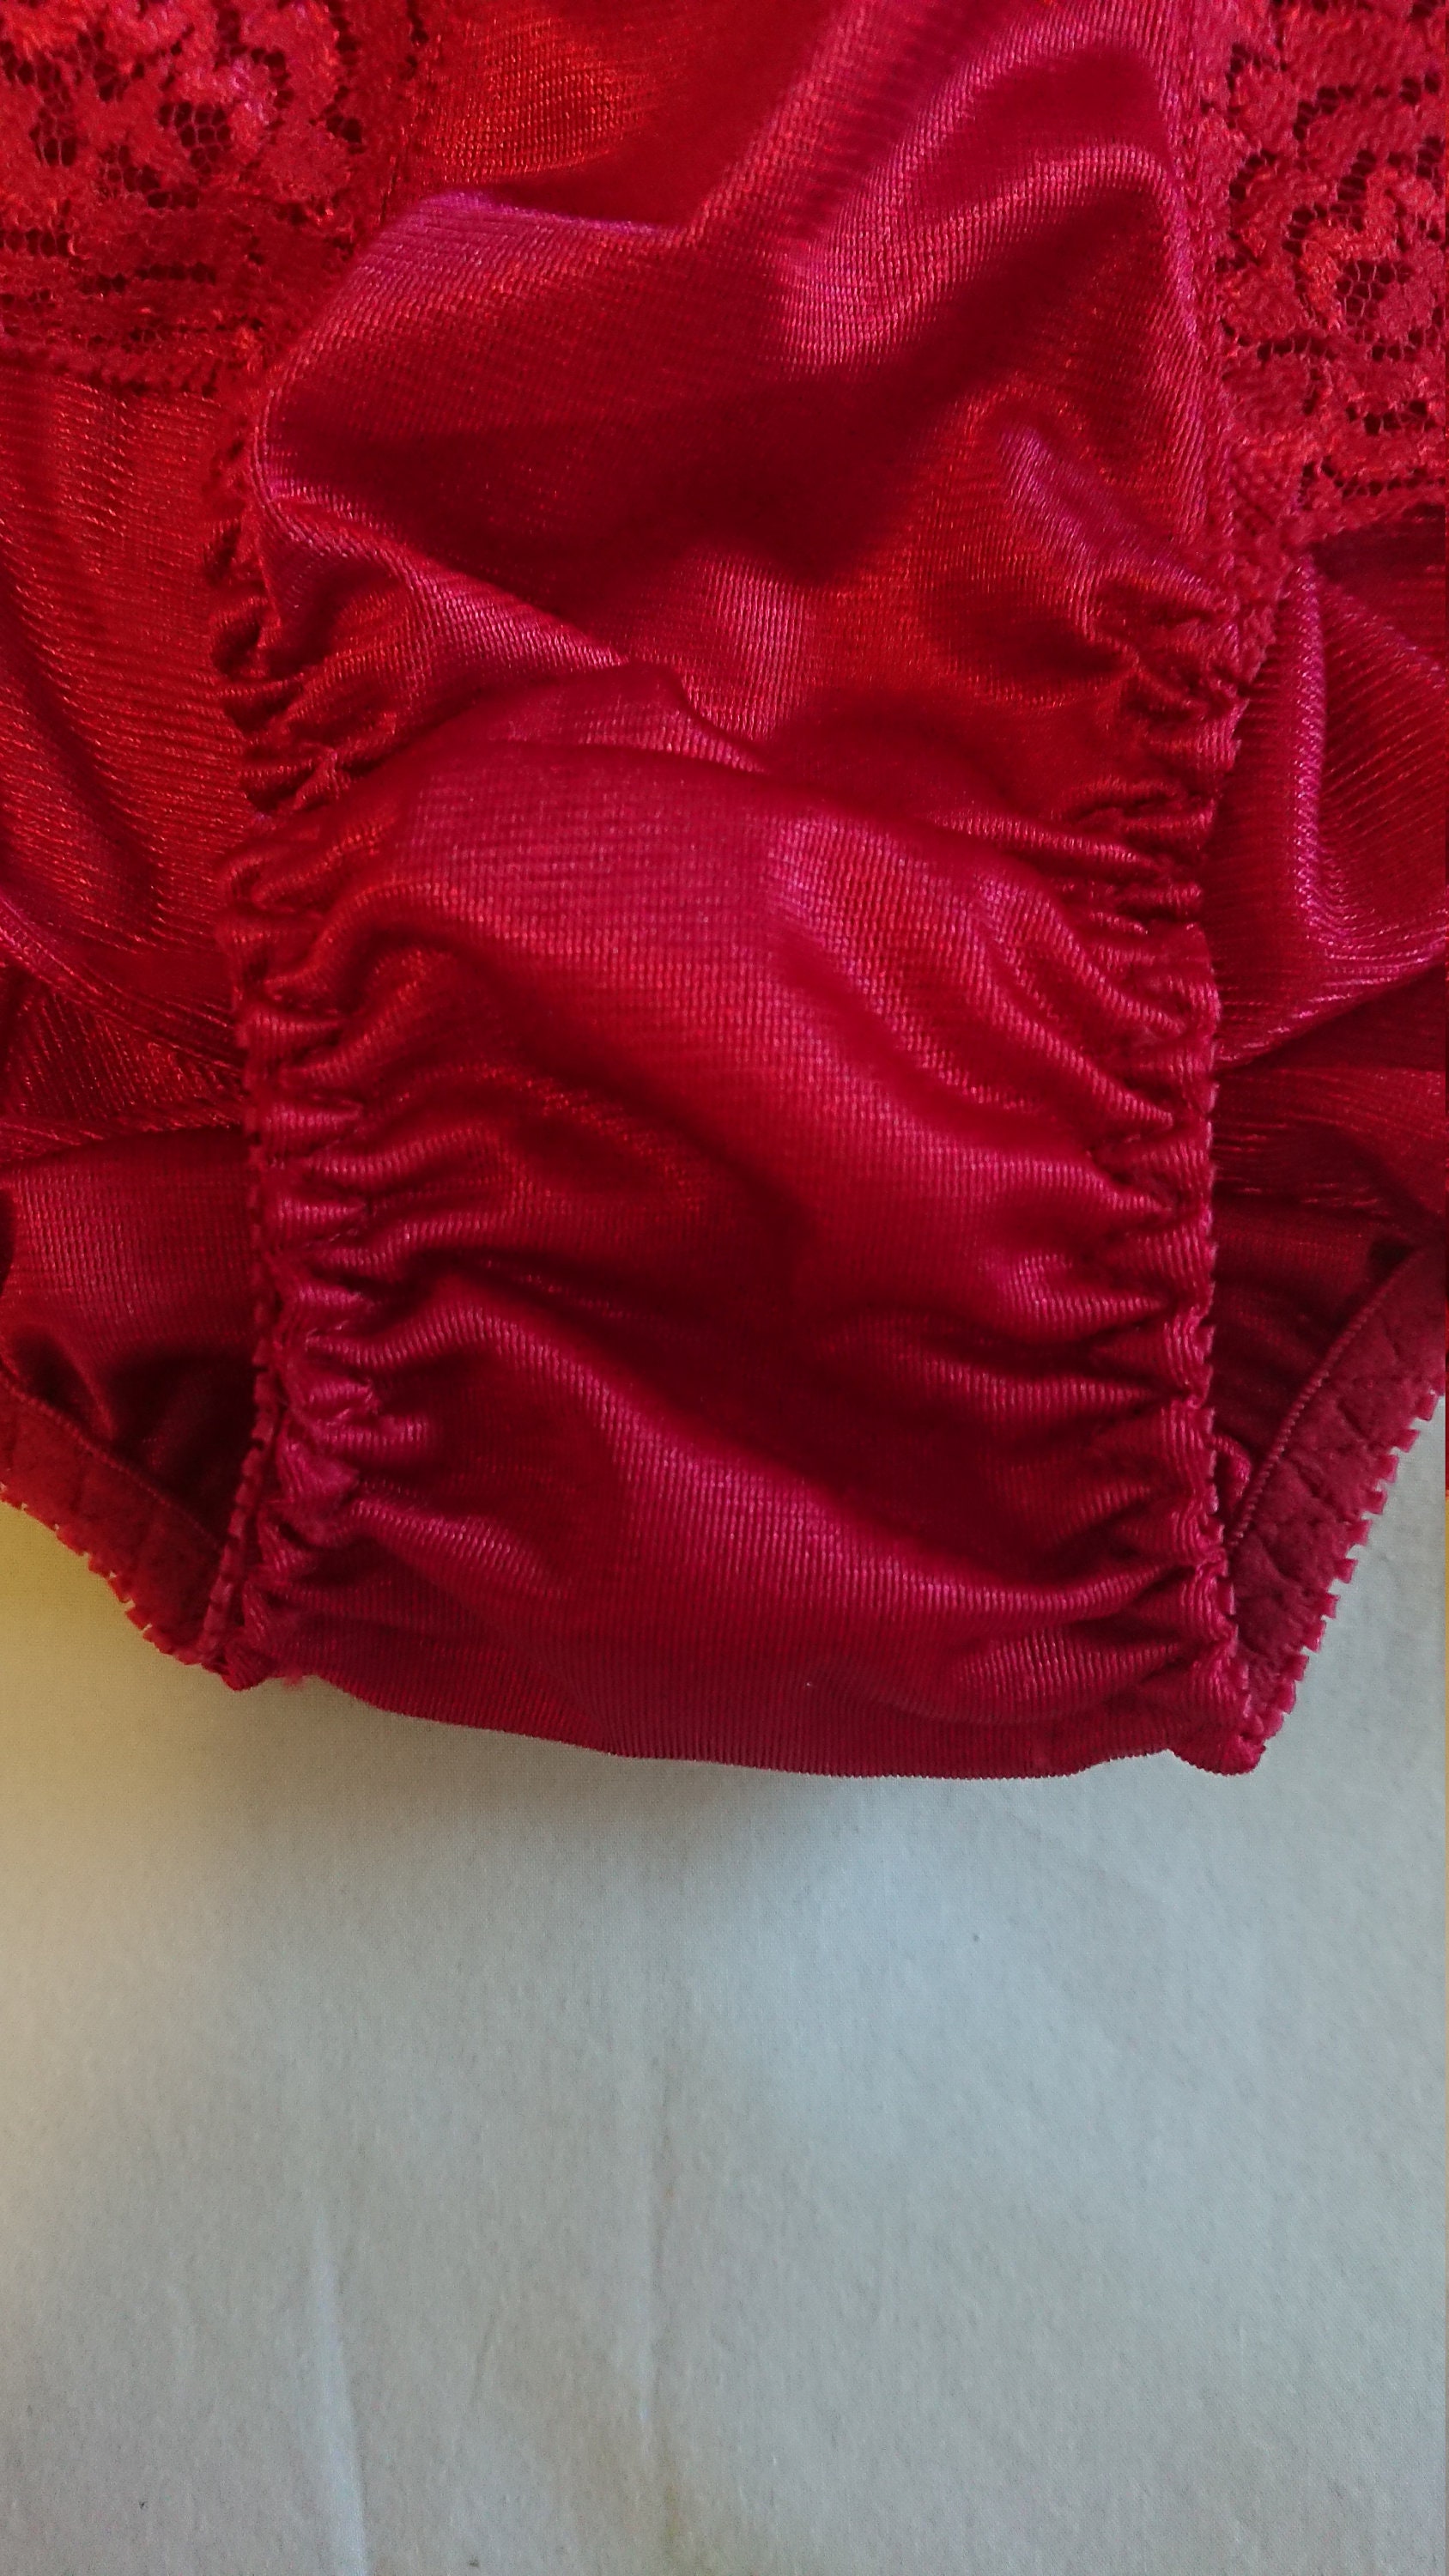 Silky Bikini Panties by Jintana Lingerie size 10 Aus/uk & 5/US 